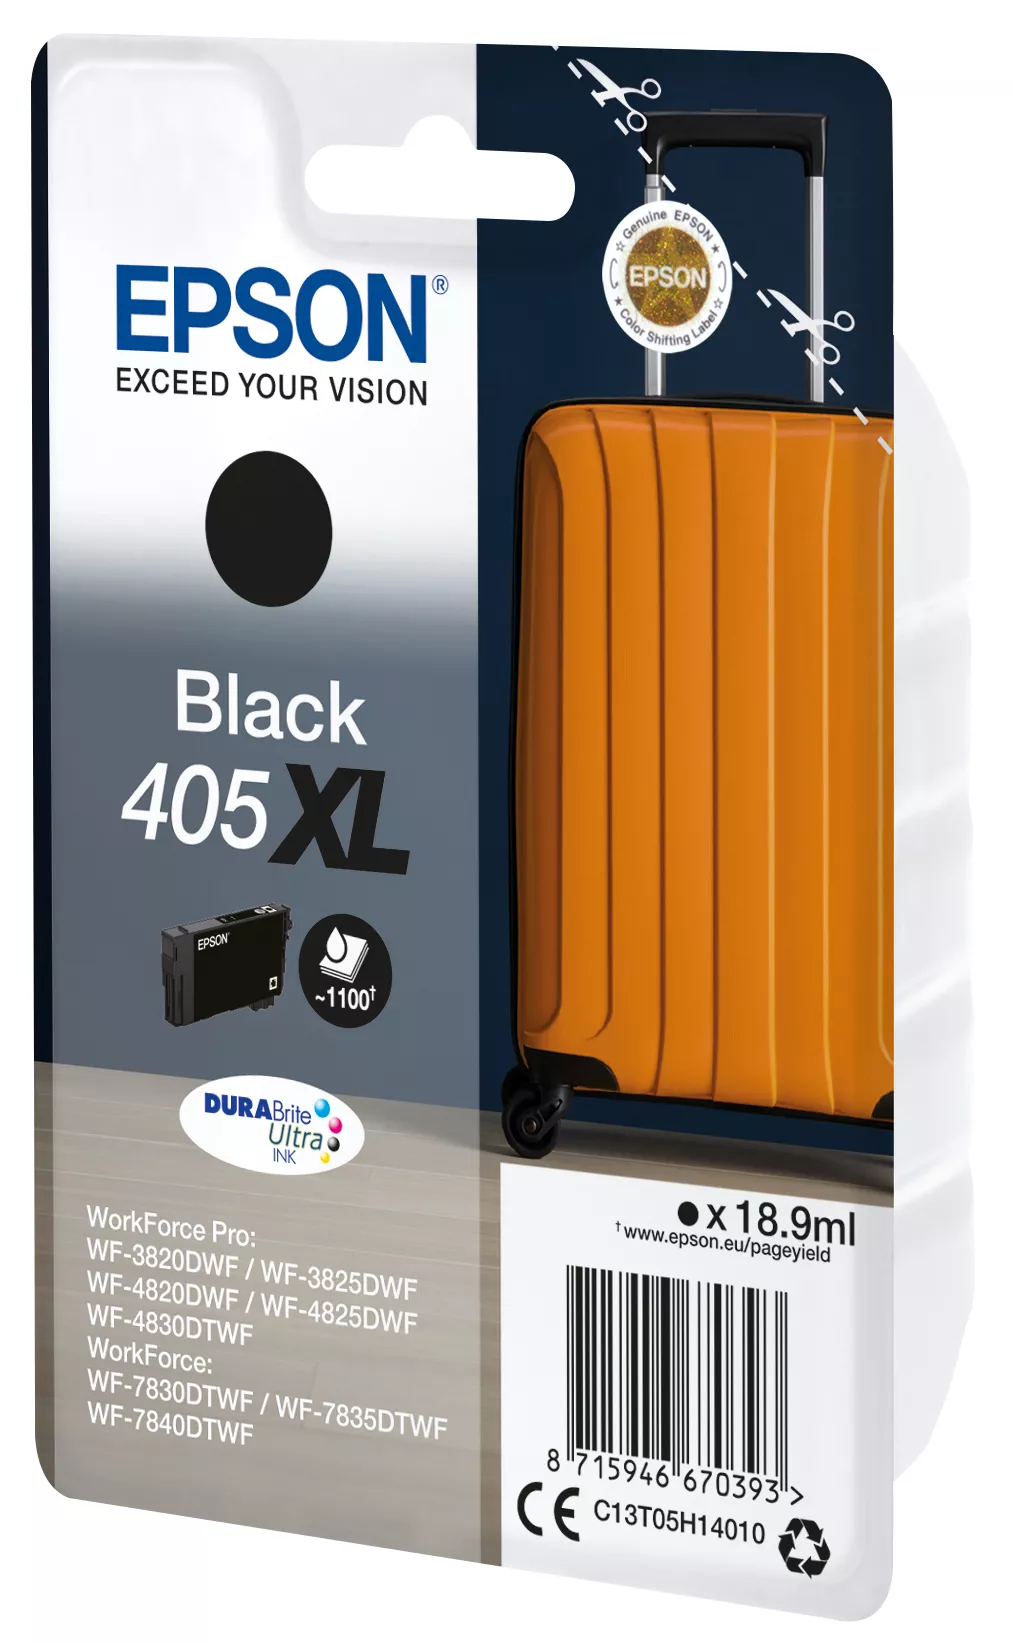 Vente Epson Singlepack Black 405XL DURABrite Ultra Ink Epson au meilleur prix - visuel 2